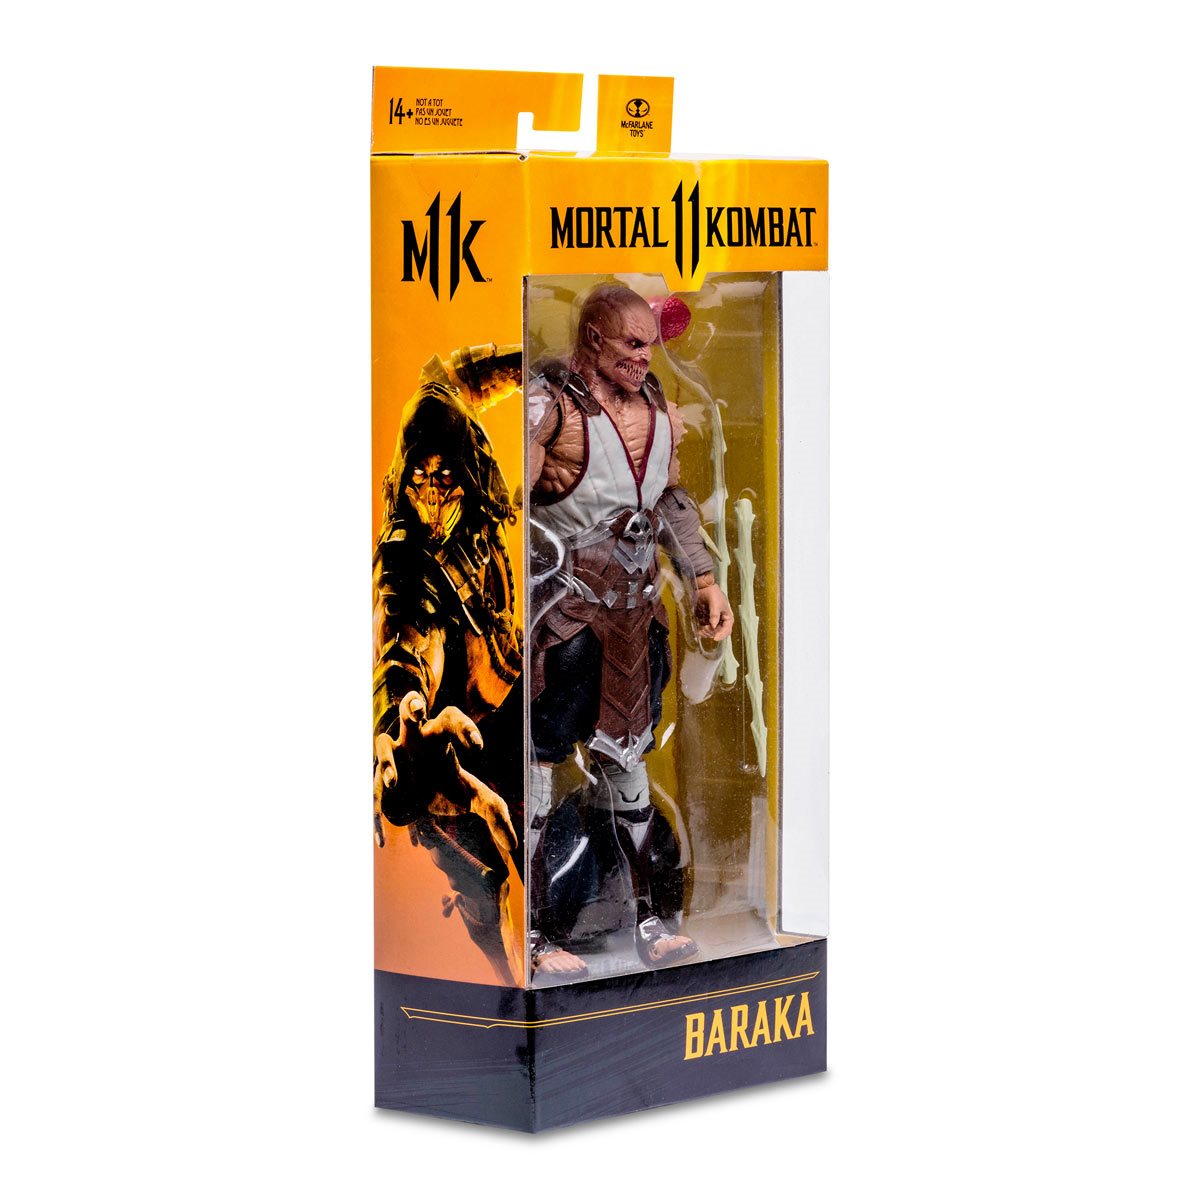 Mortal Kombat - Baraka | Greeting Card